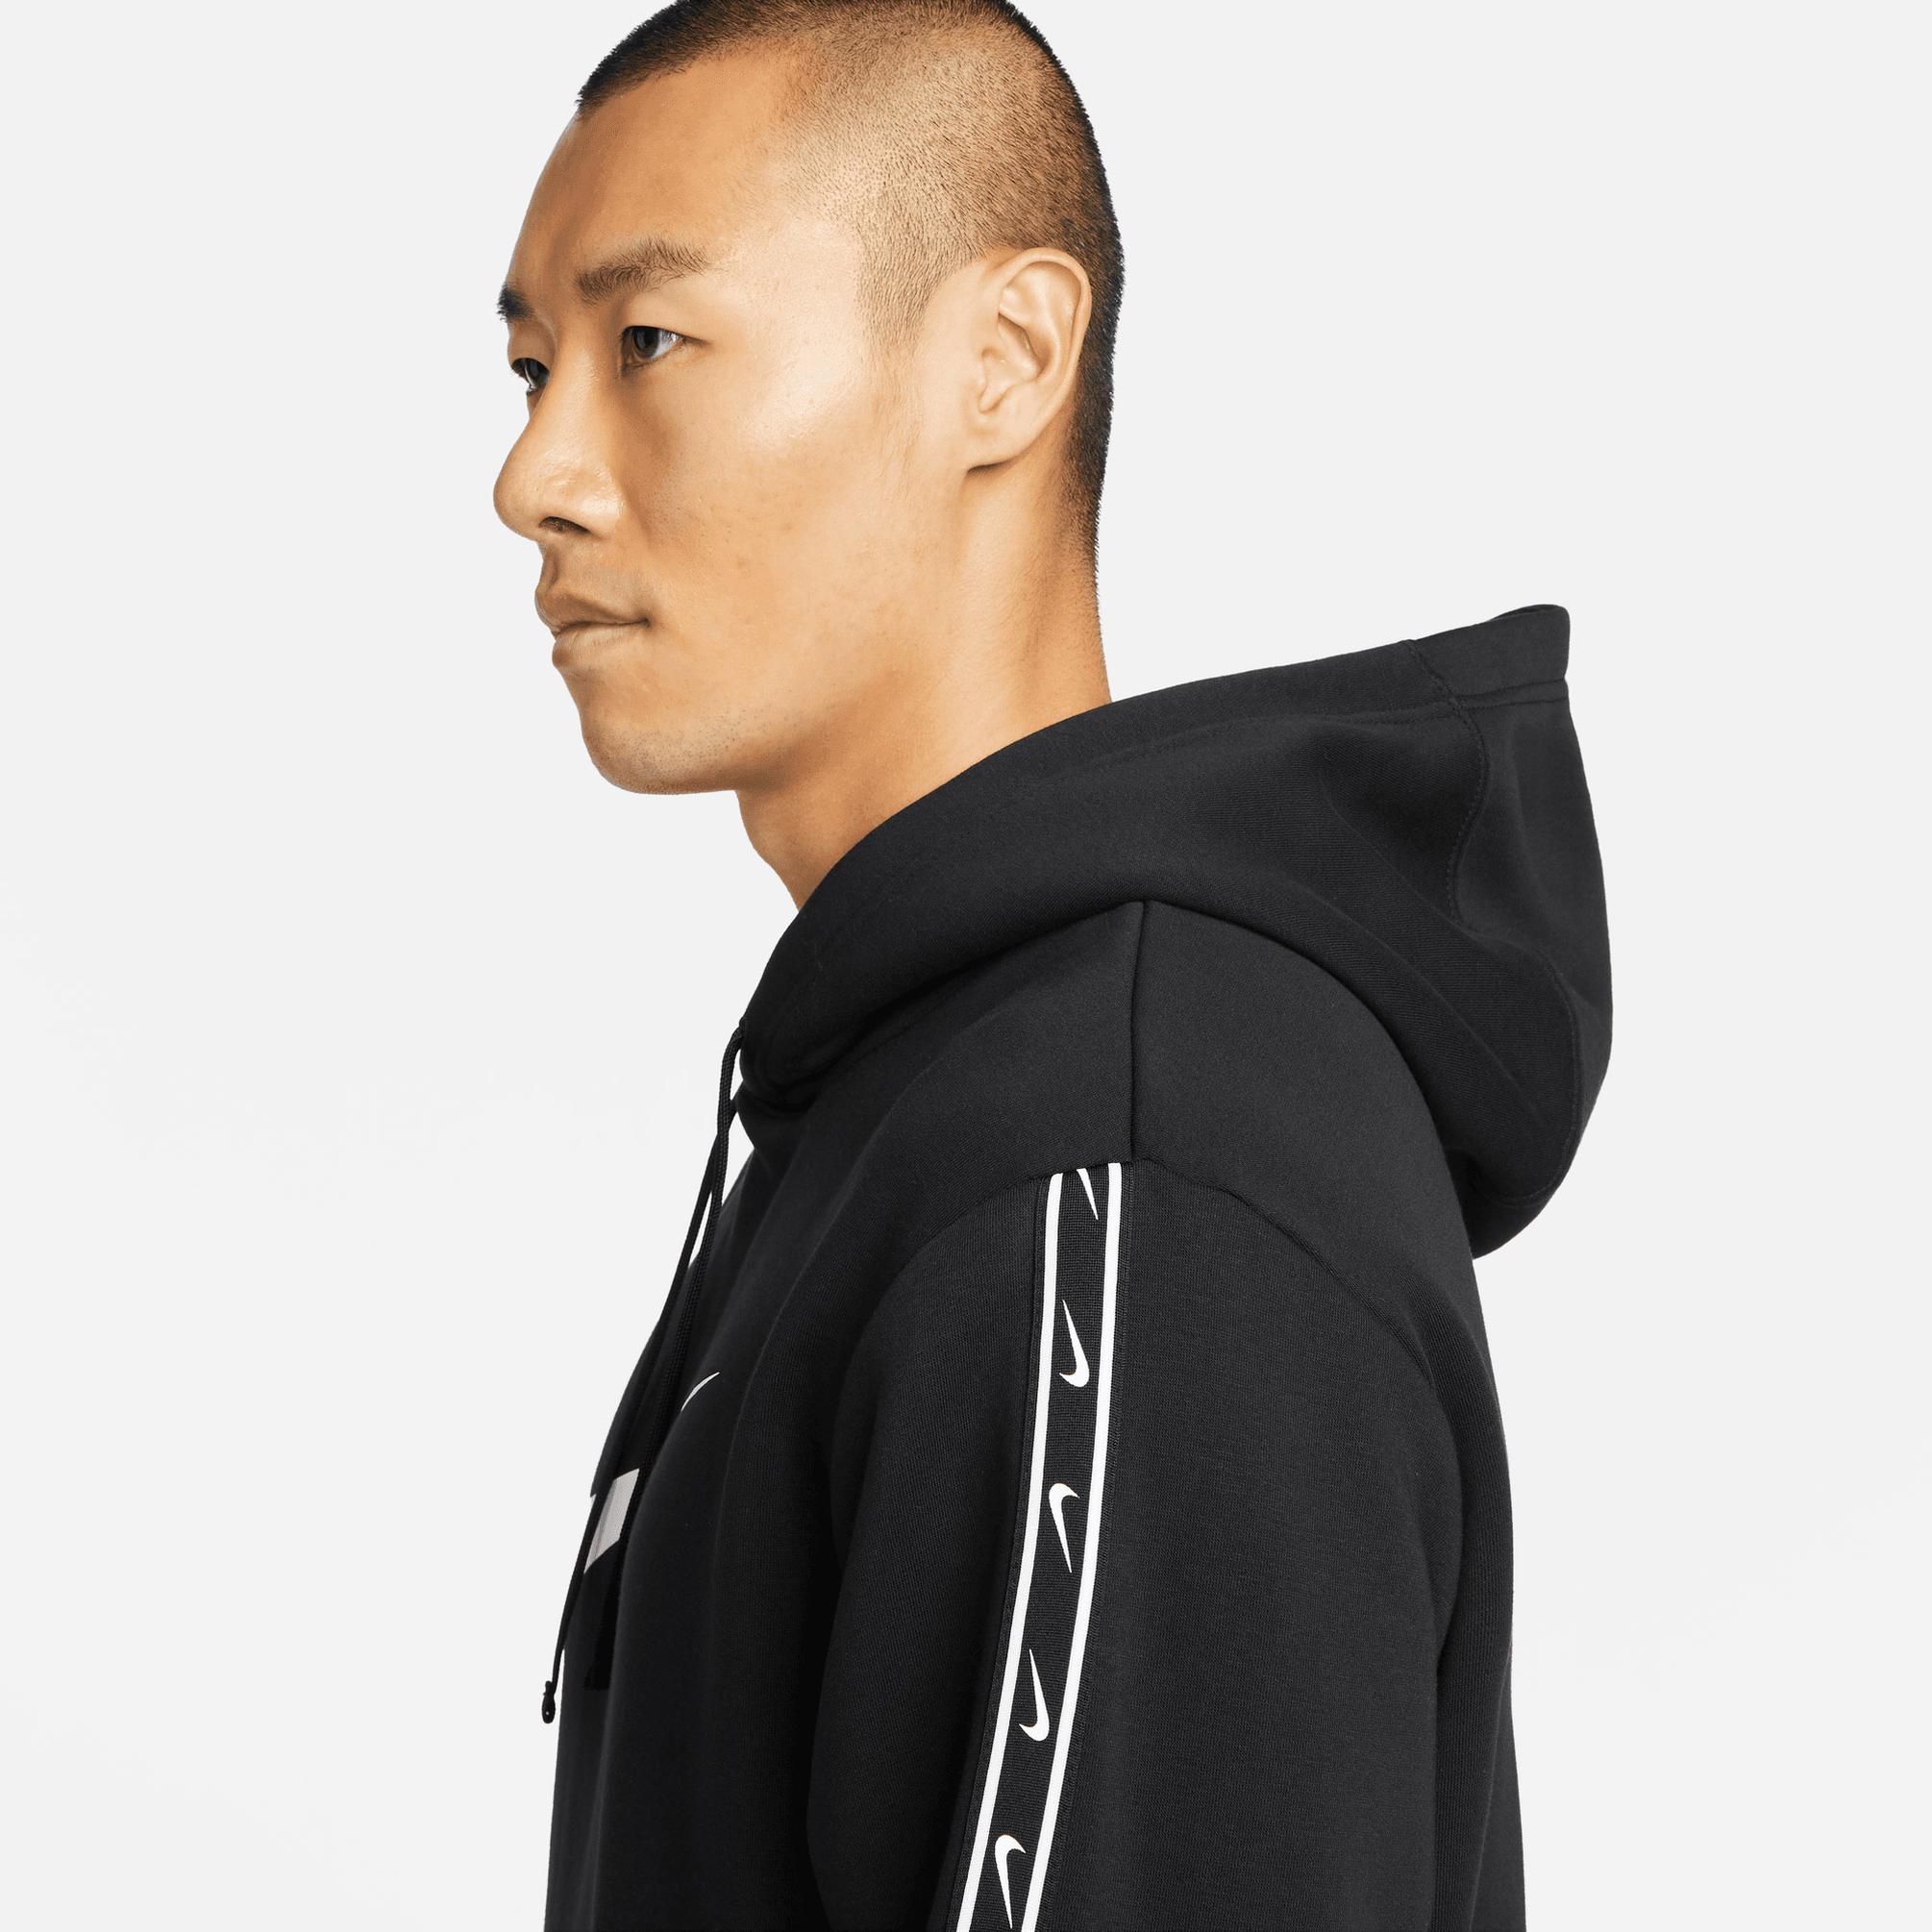  Nike Sportswear Repeat Fleece Erkek Siyah Kapüşonlu Sweatshirt